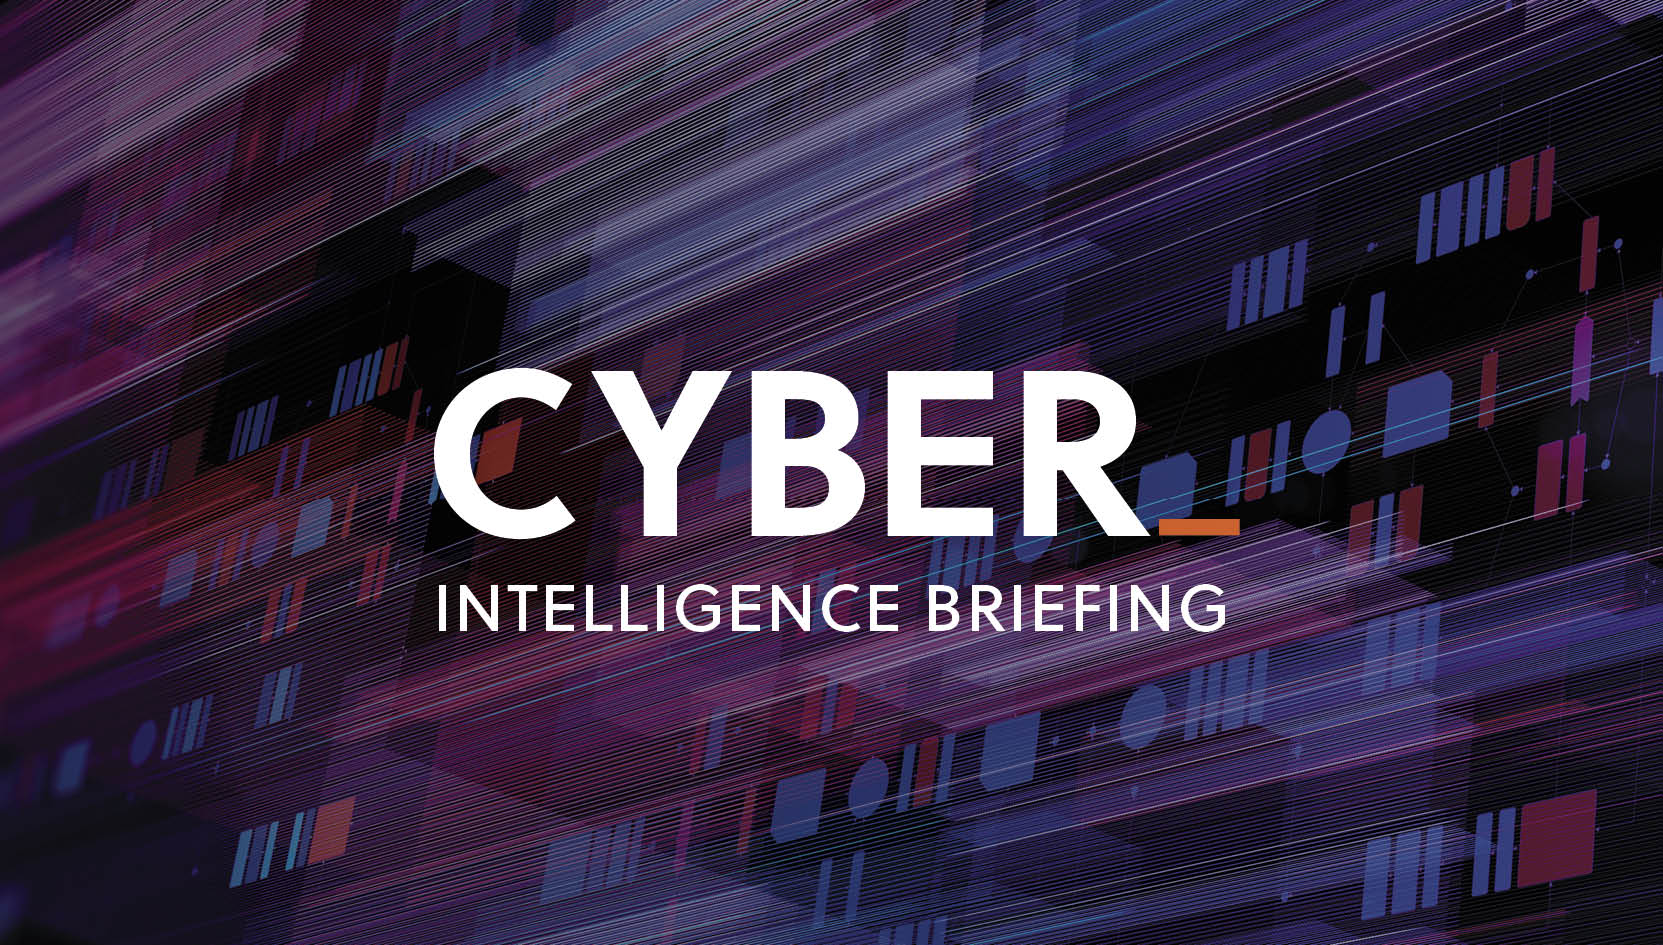 Cyber Intelligence News